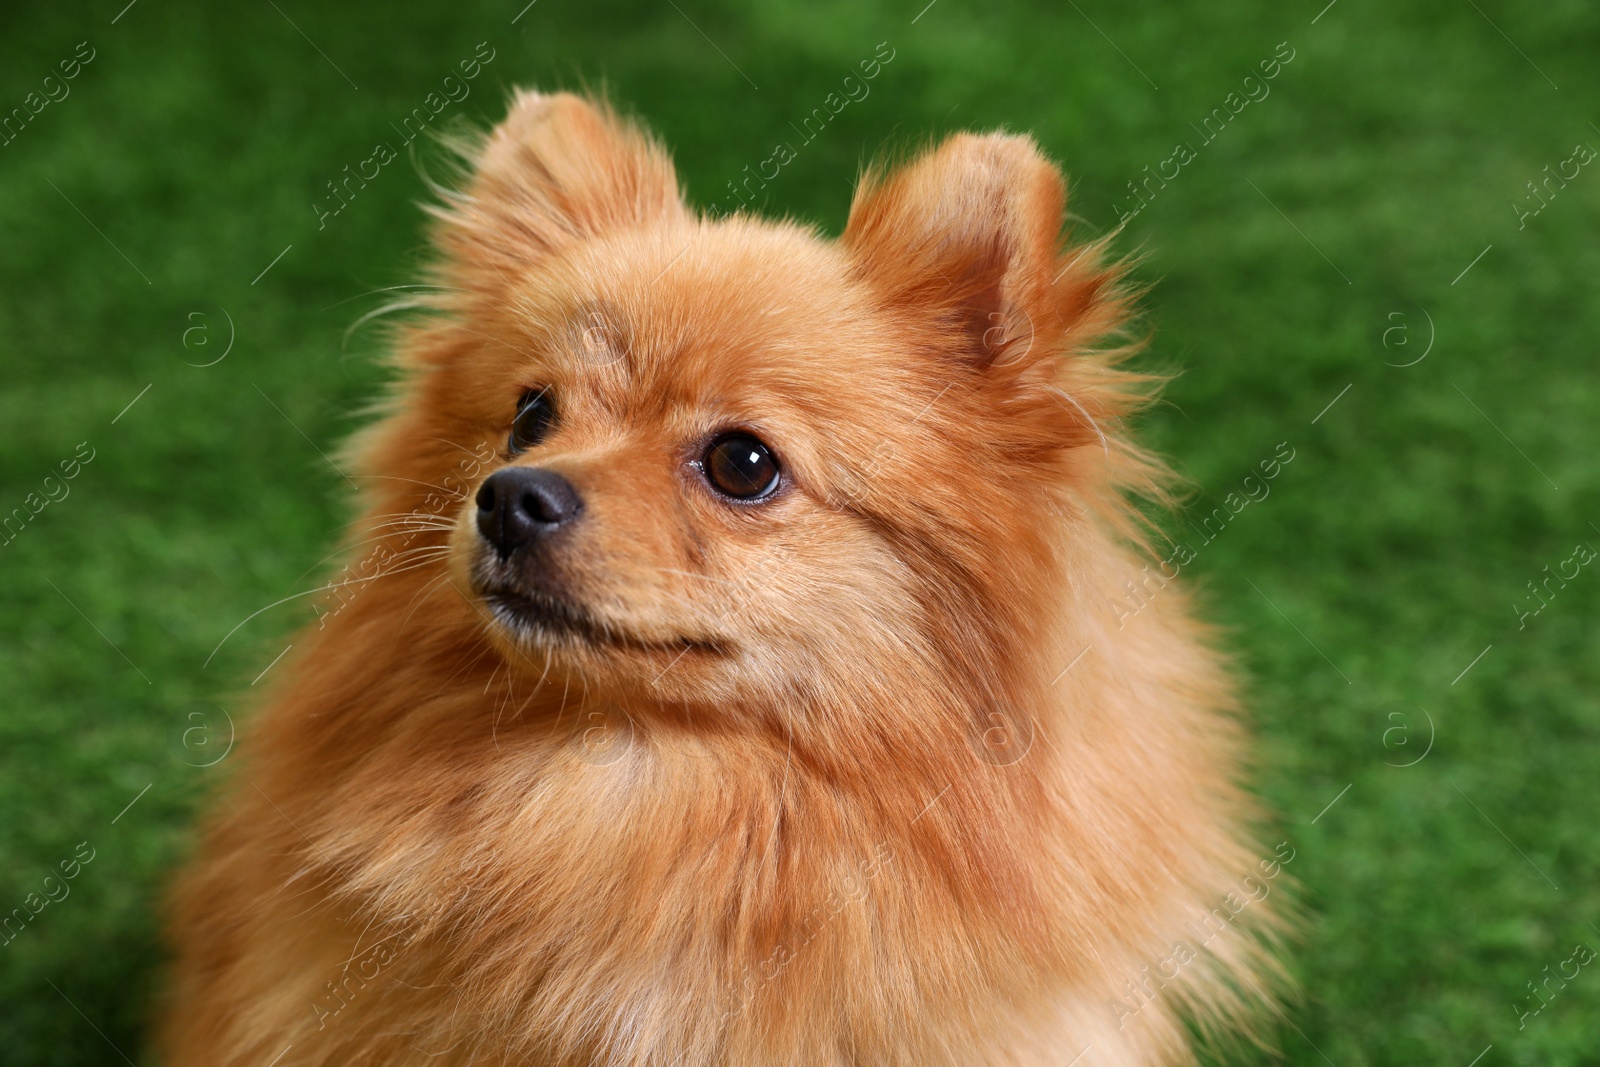 Photo of Cute fluffy little dog on green grass